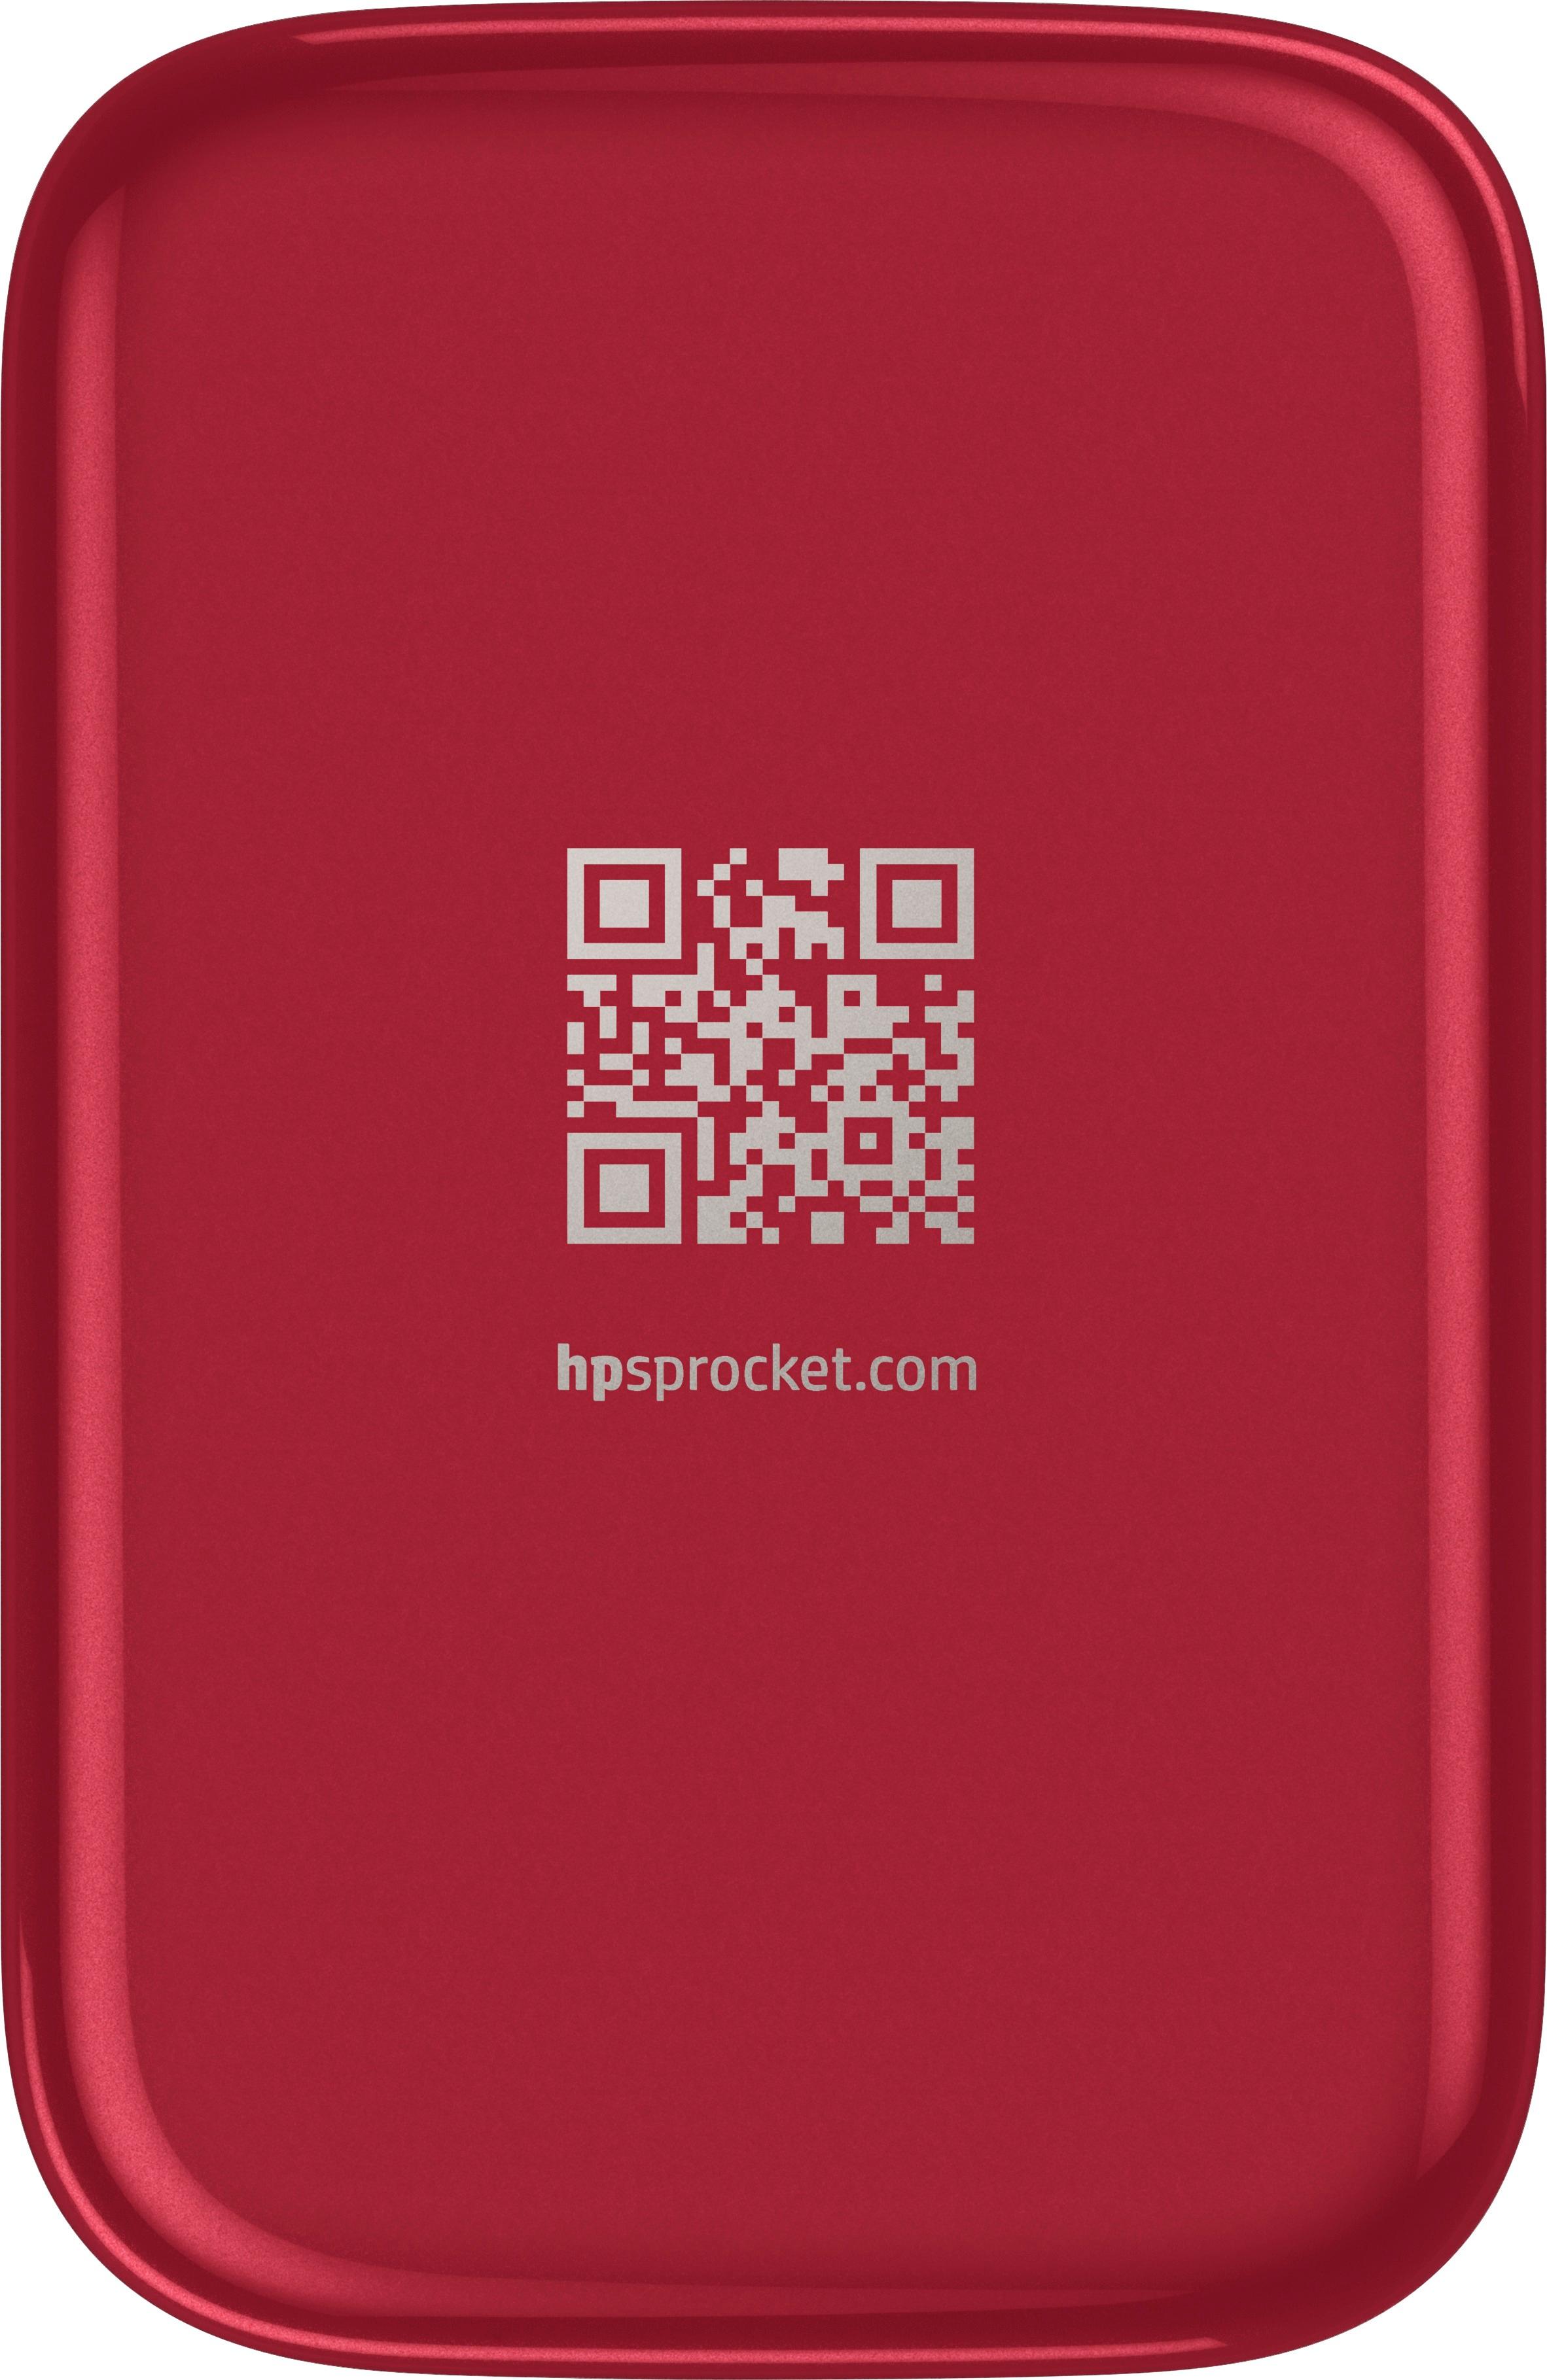 HP® Red Sprocket Photo Printer (Z3Z93A#B1H)